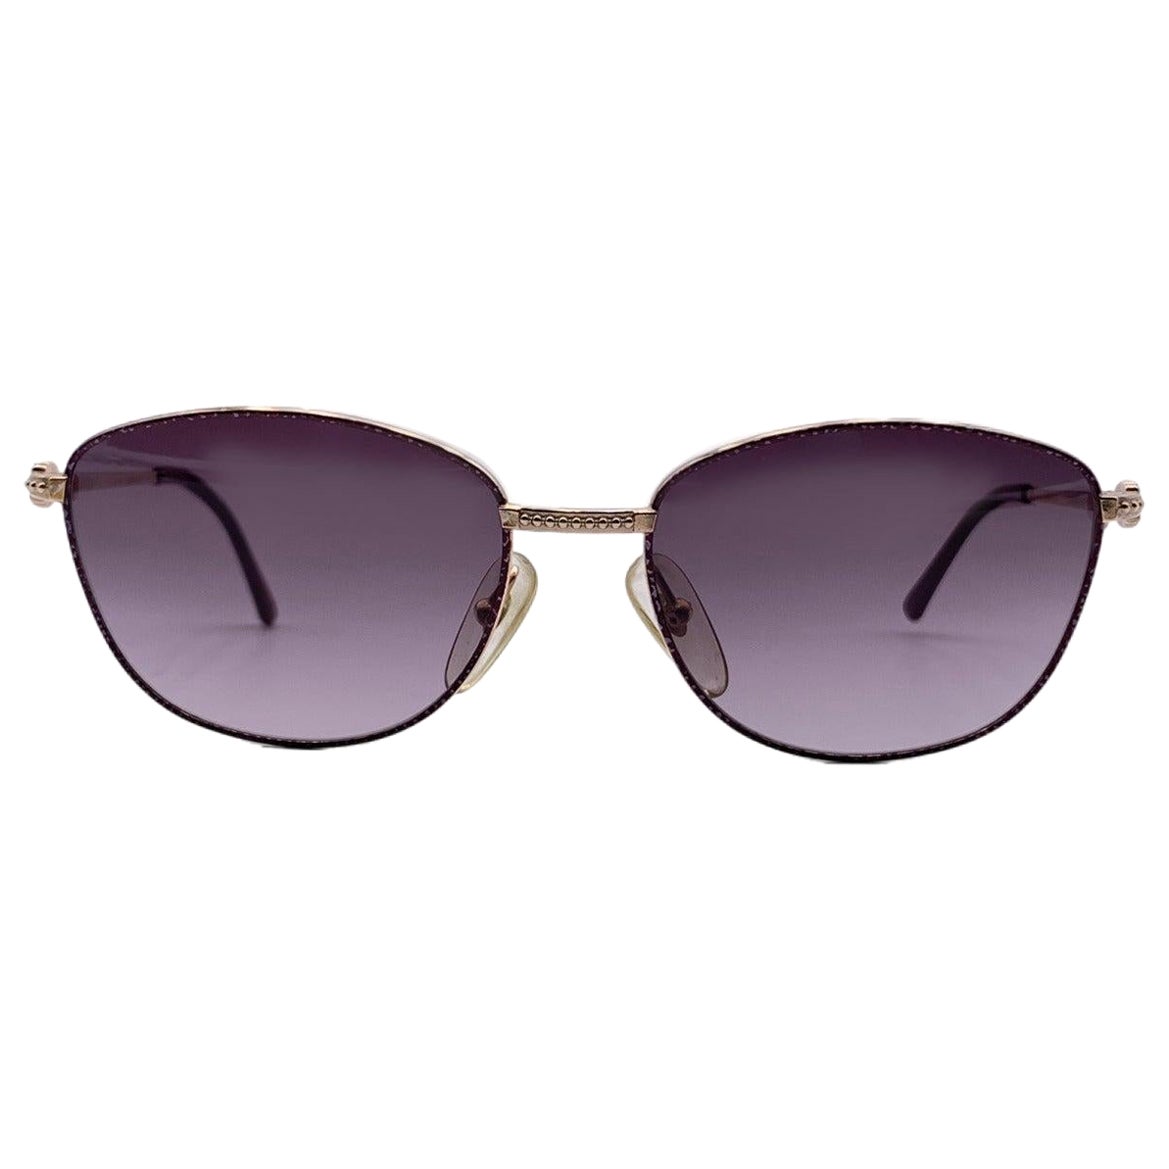 Christian Dior Vintage Women Sunglasses 2741 48 55/17 135mm For Sale